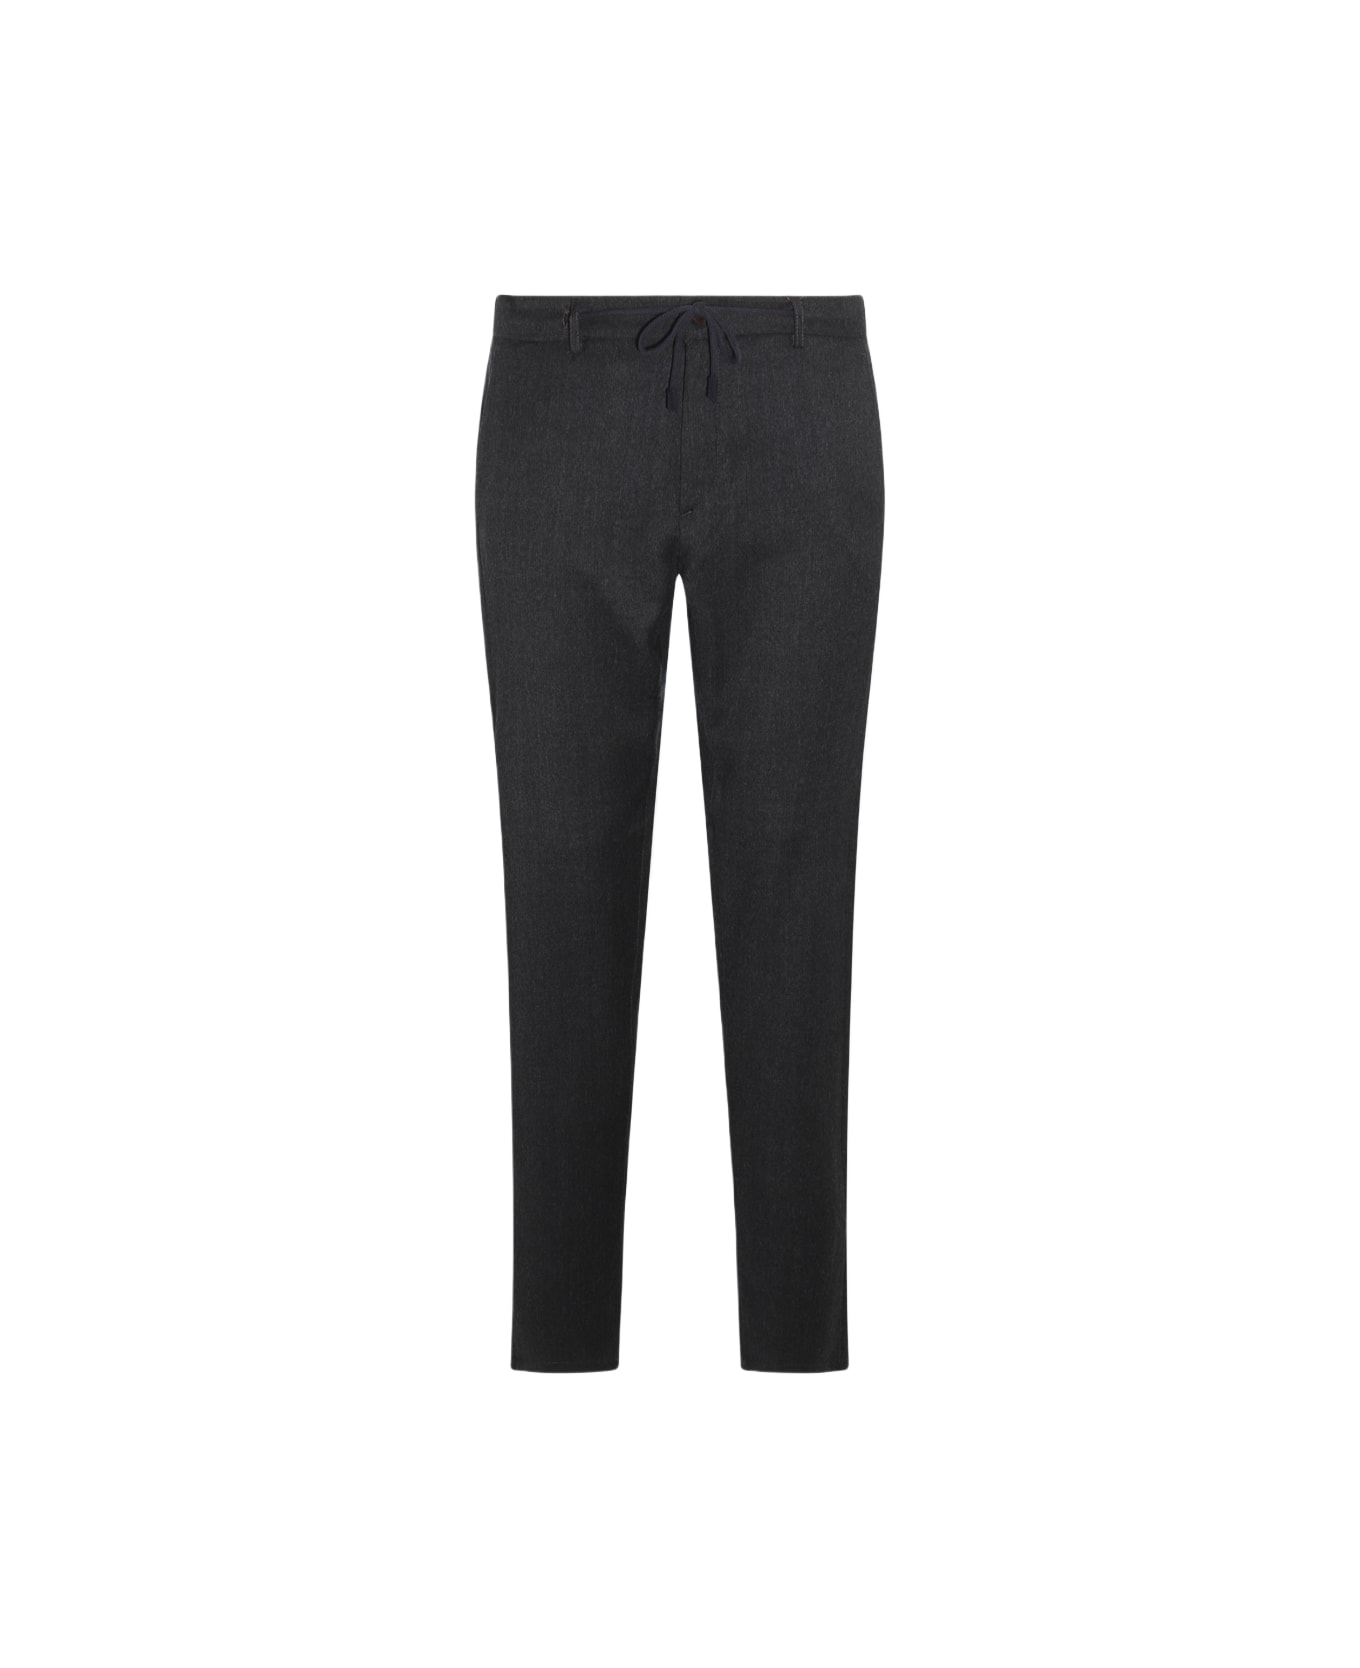 Canali Dark Grey Cotton Pants - Grey